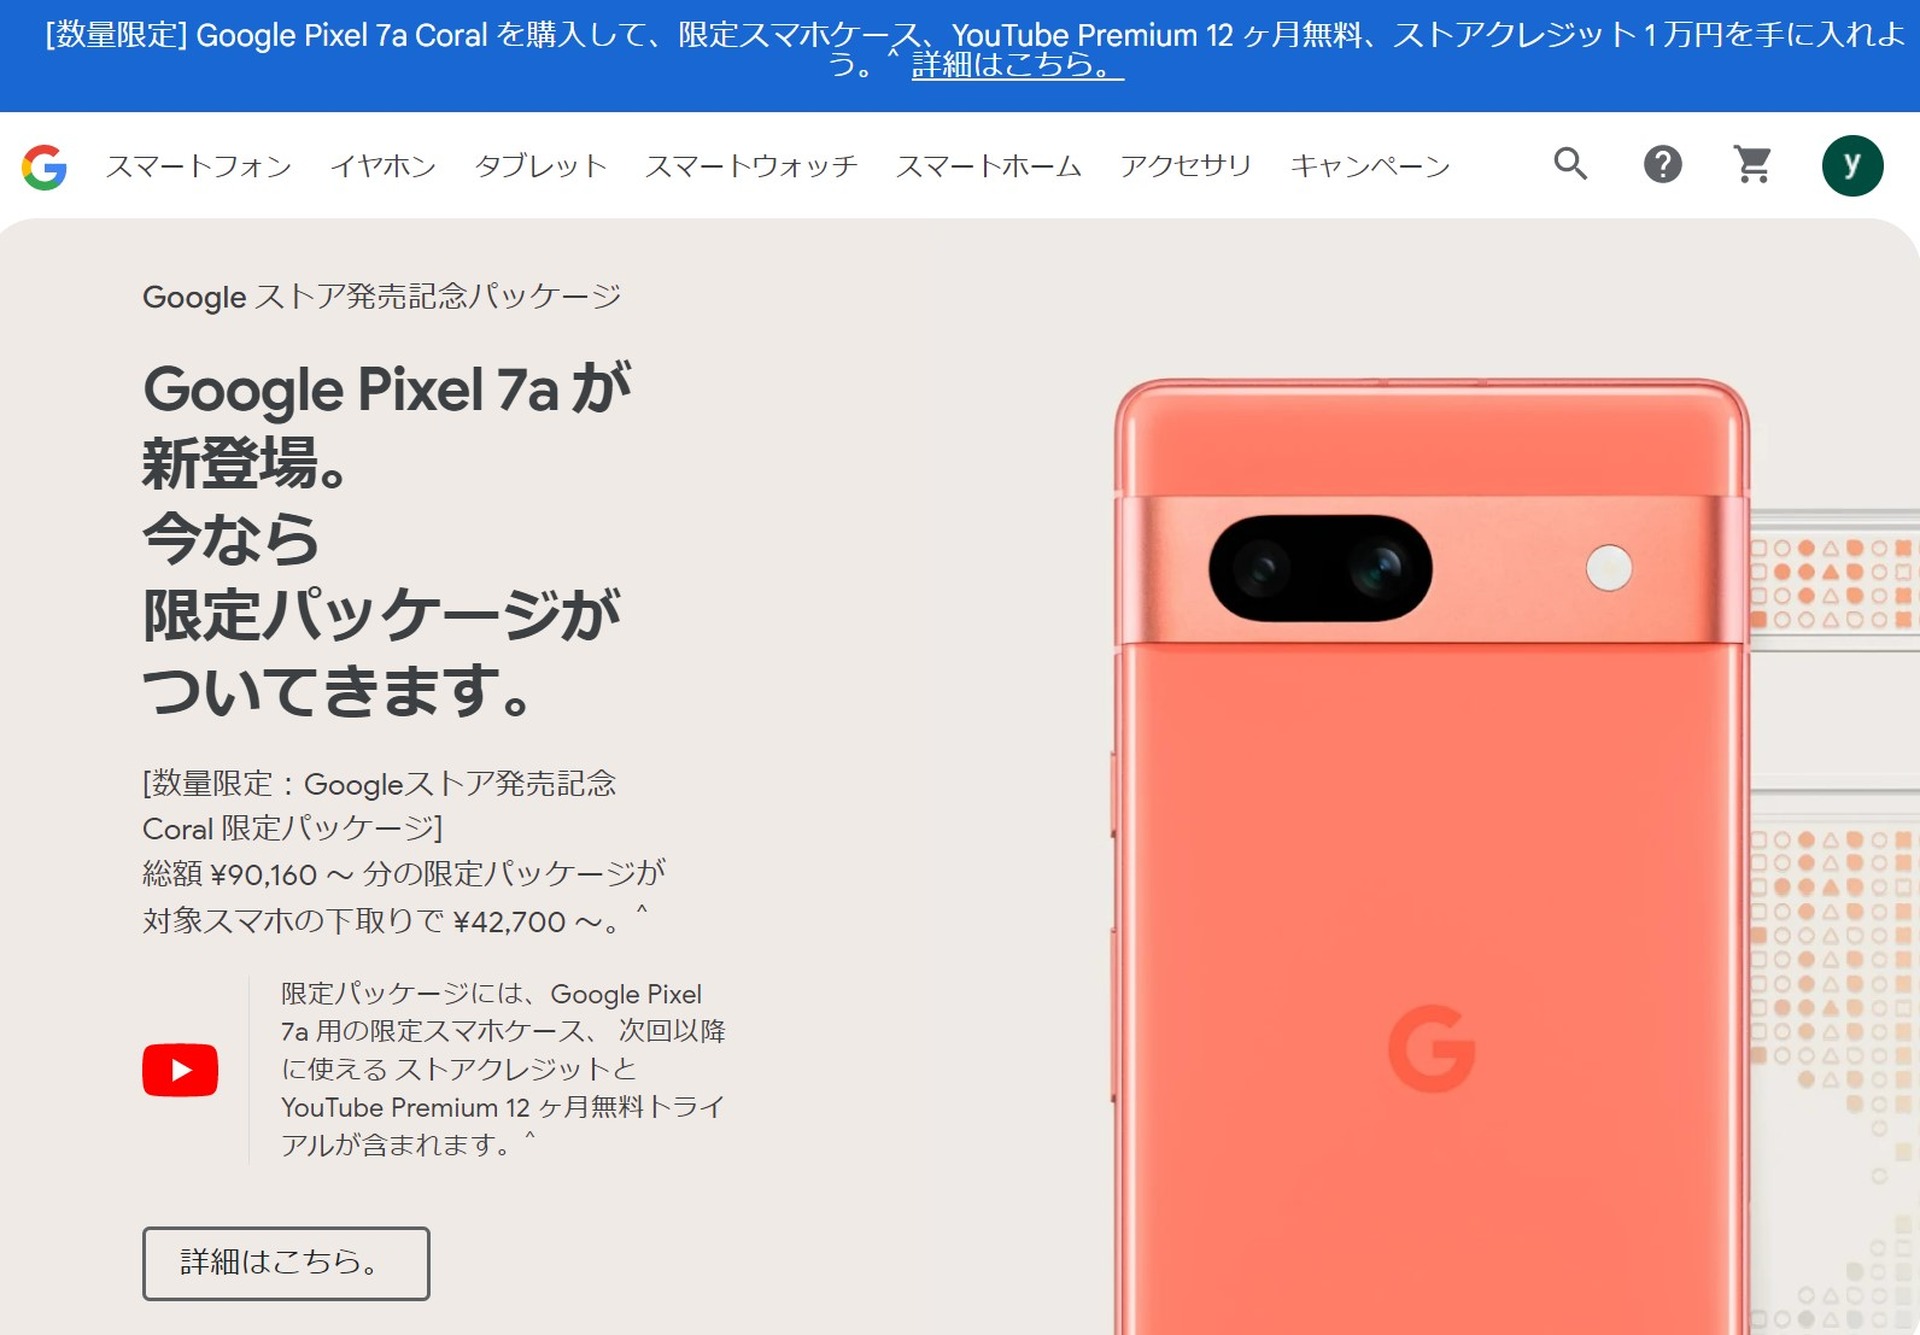 Google Pixel 7a Coral ＋YouTube Premium